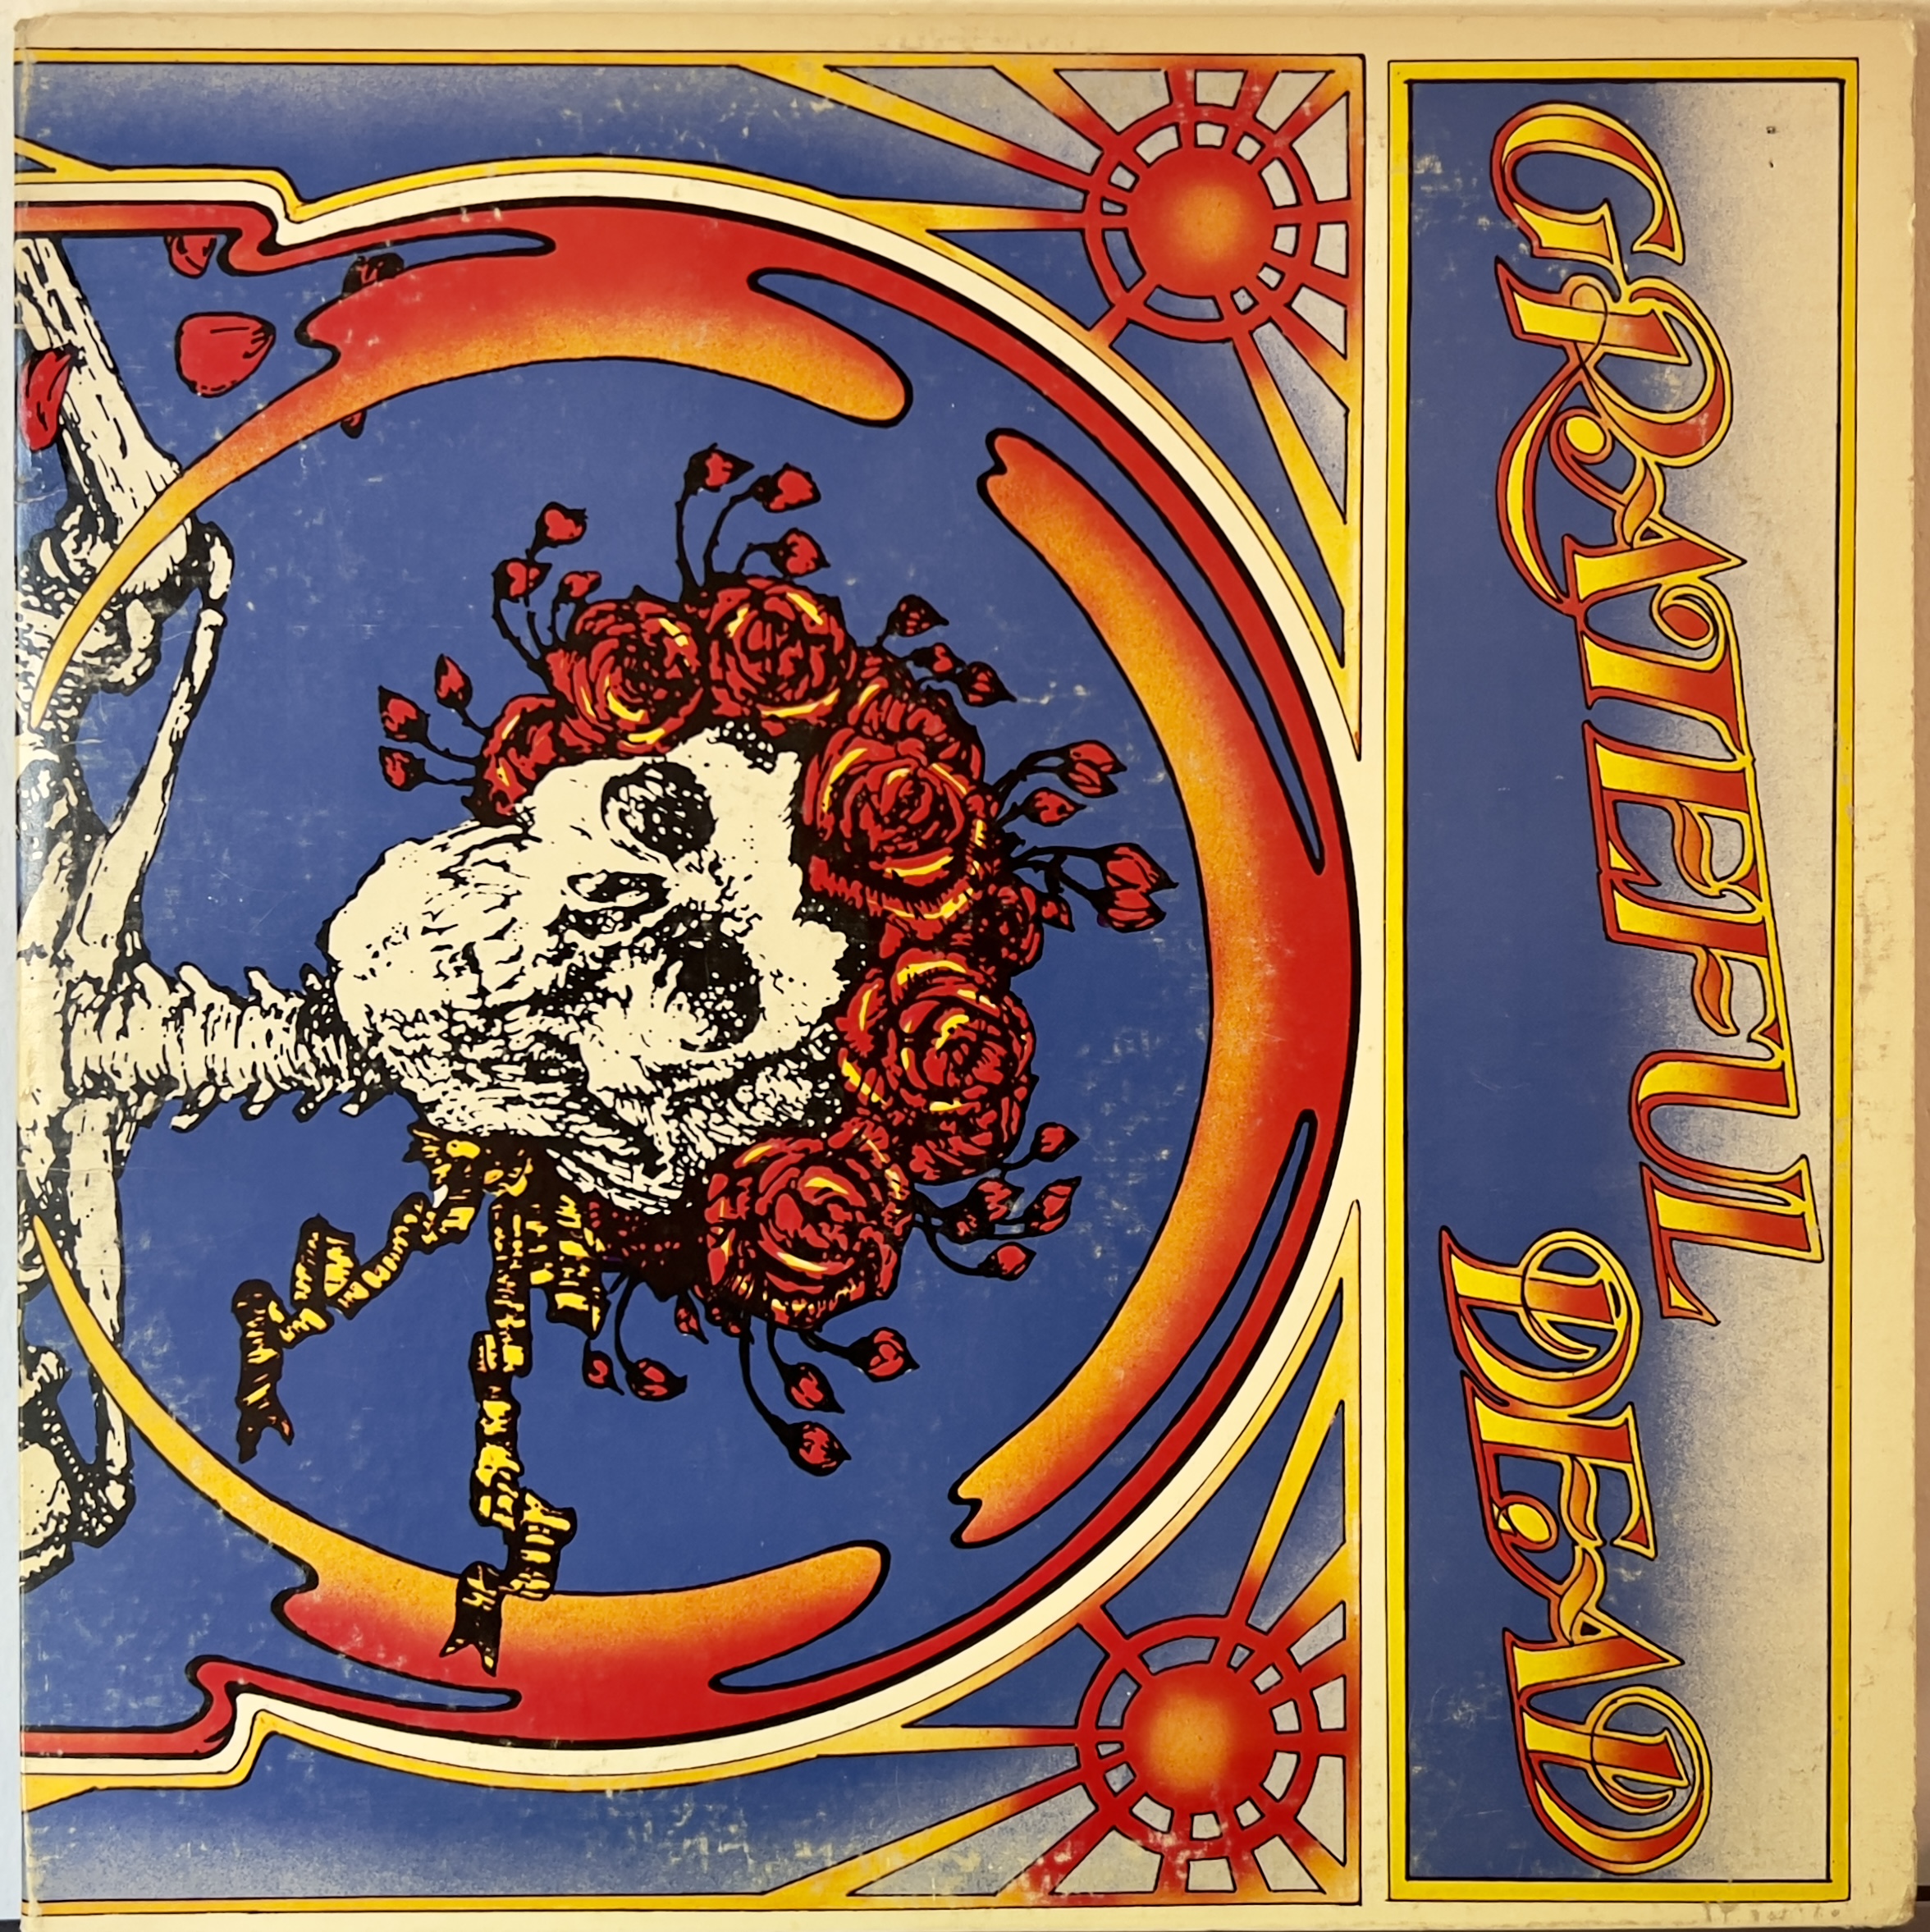 Grateful Dead (Skull Fuck / Skull and Roses) by the Grateful Dead